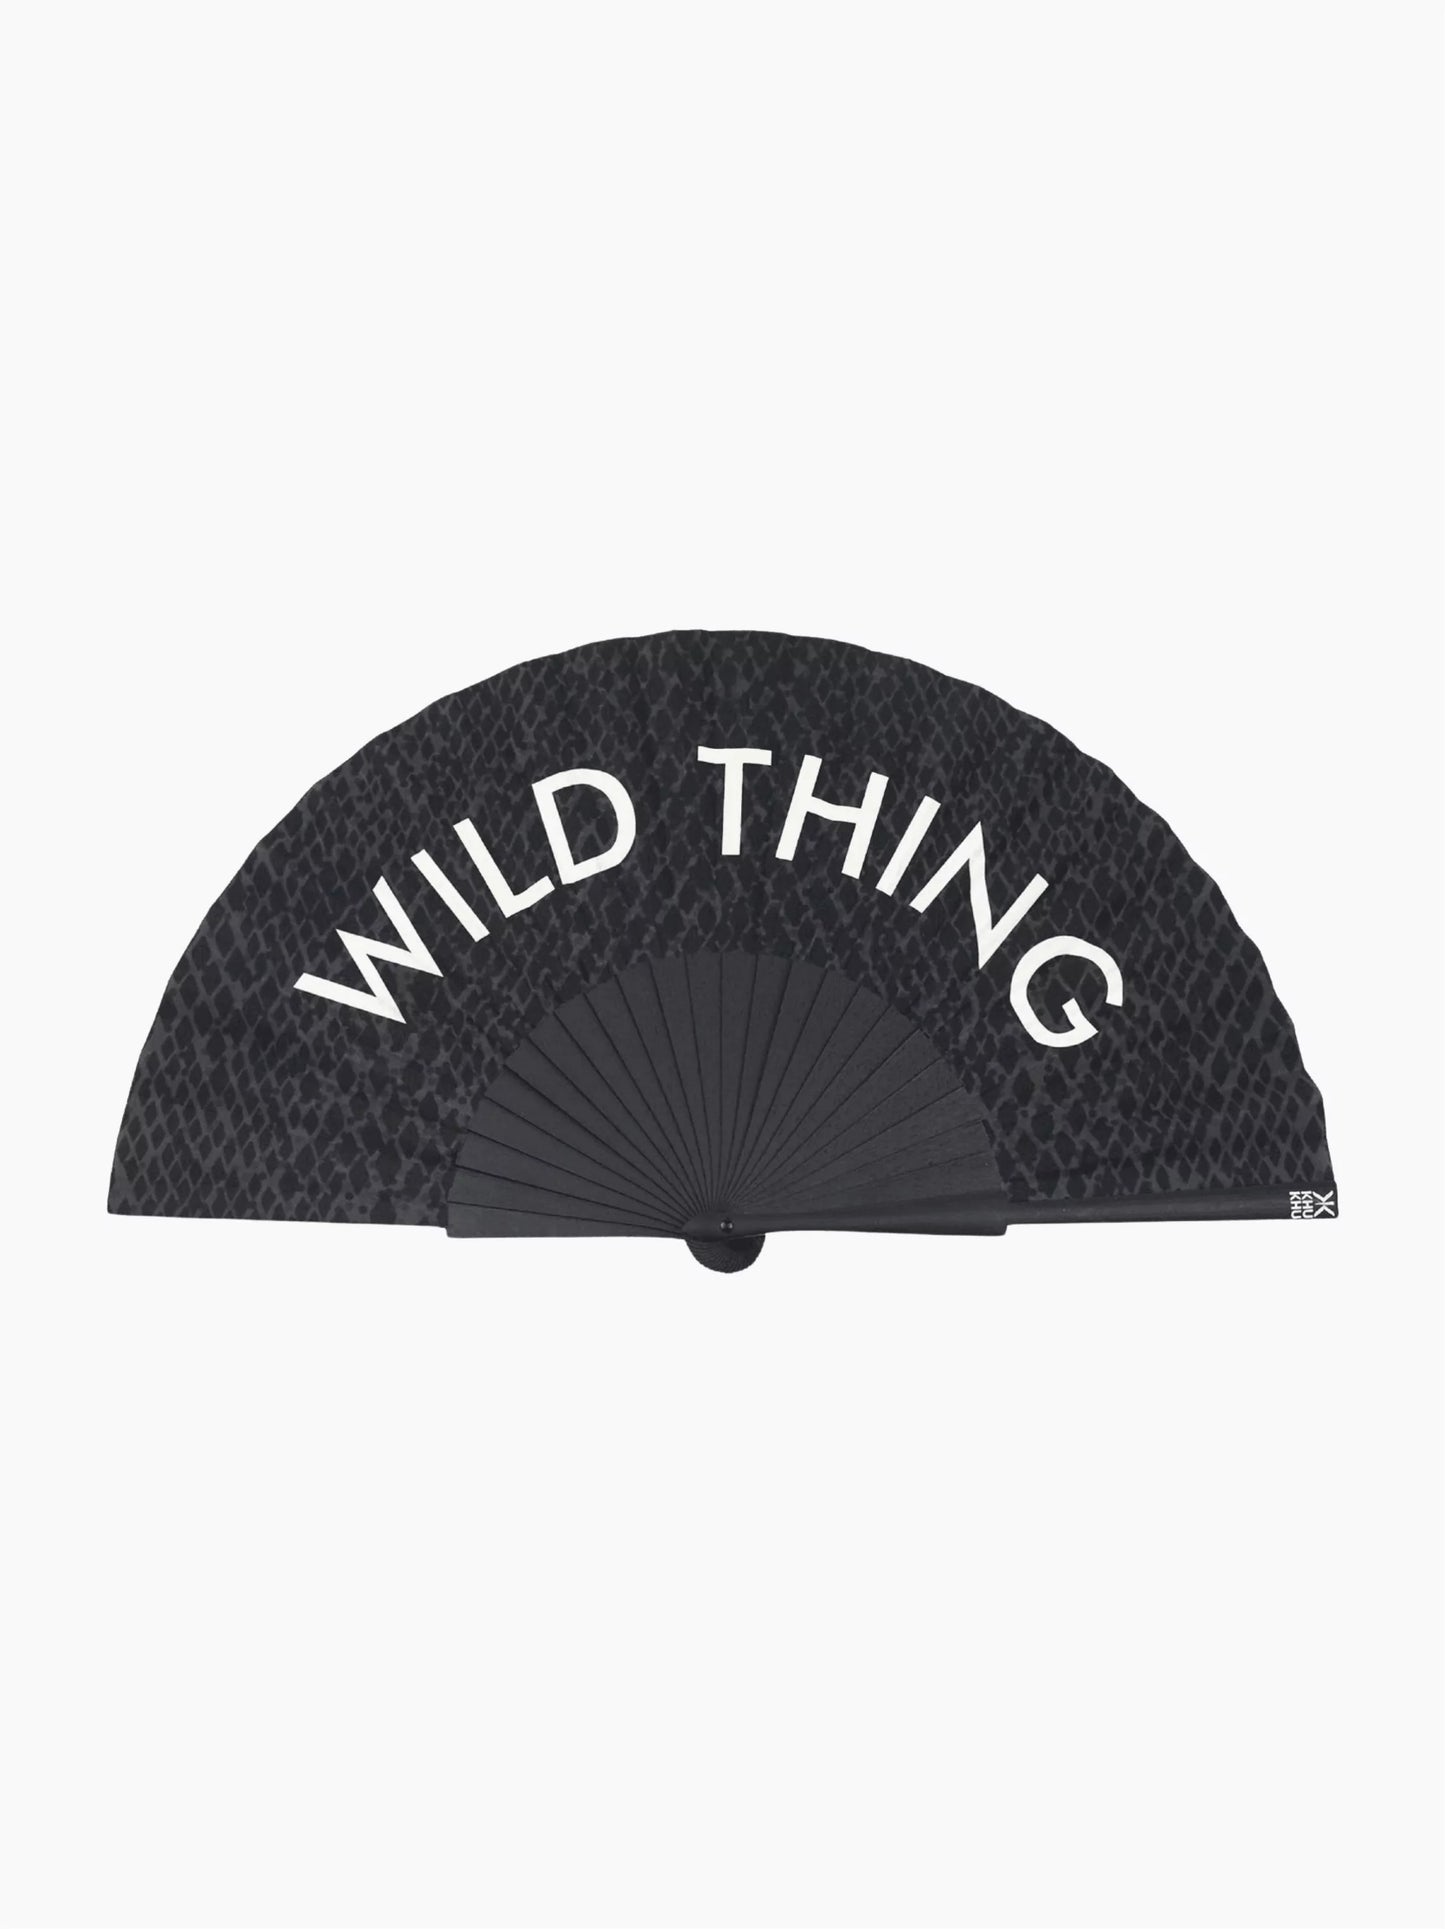 Wild Thing Hand Fan